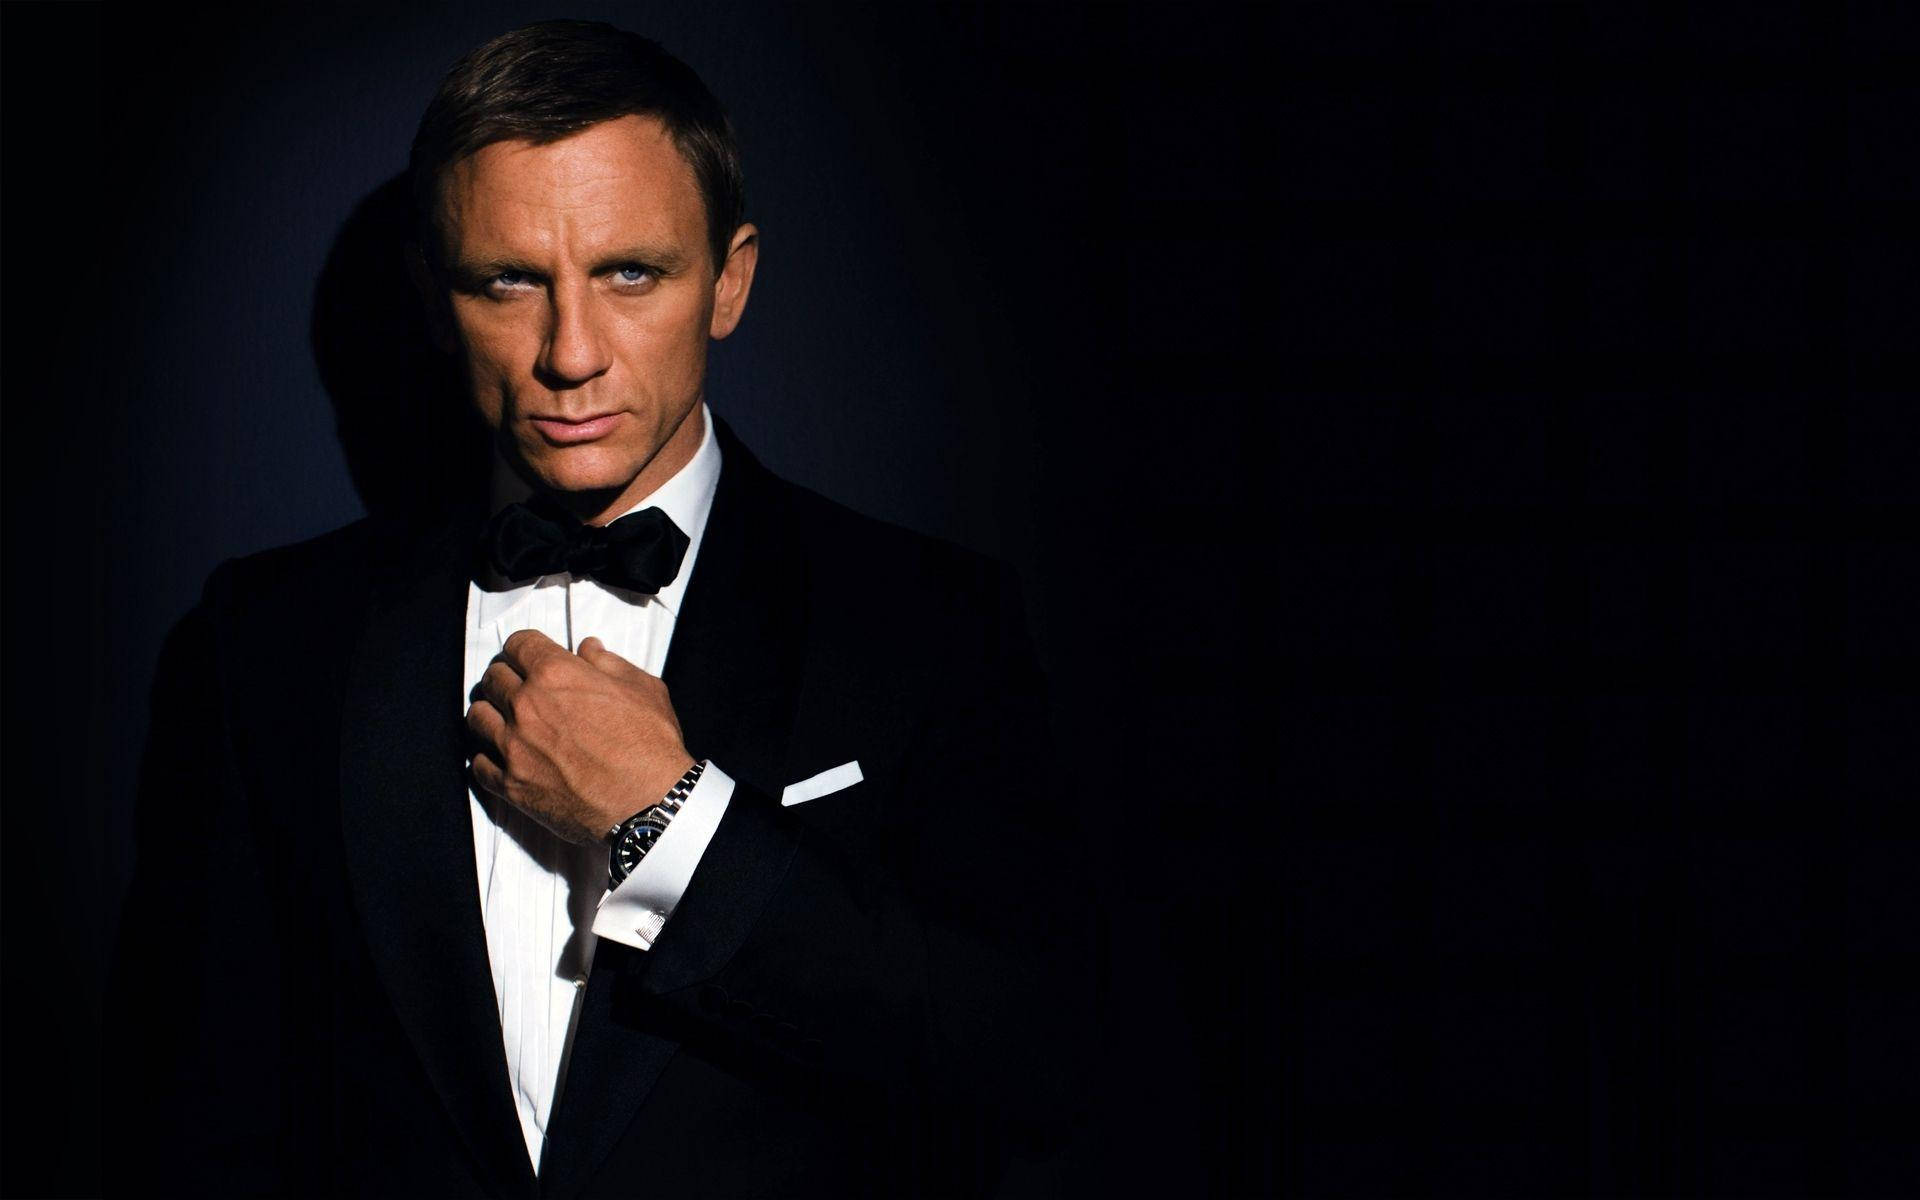 Top 999+ James Bond Wallpaper Full HD, 4K Free to Use